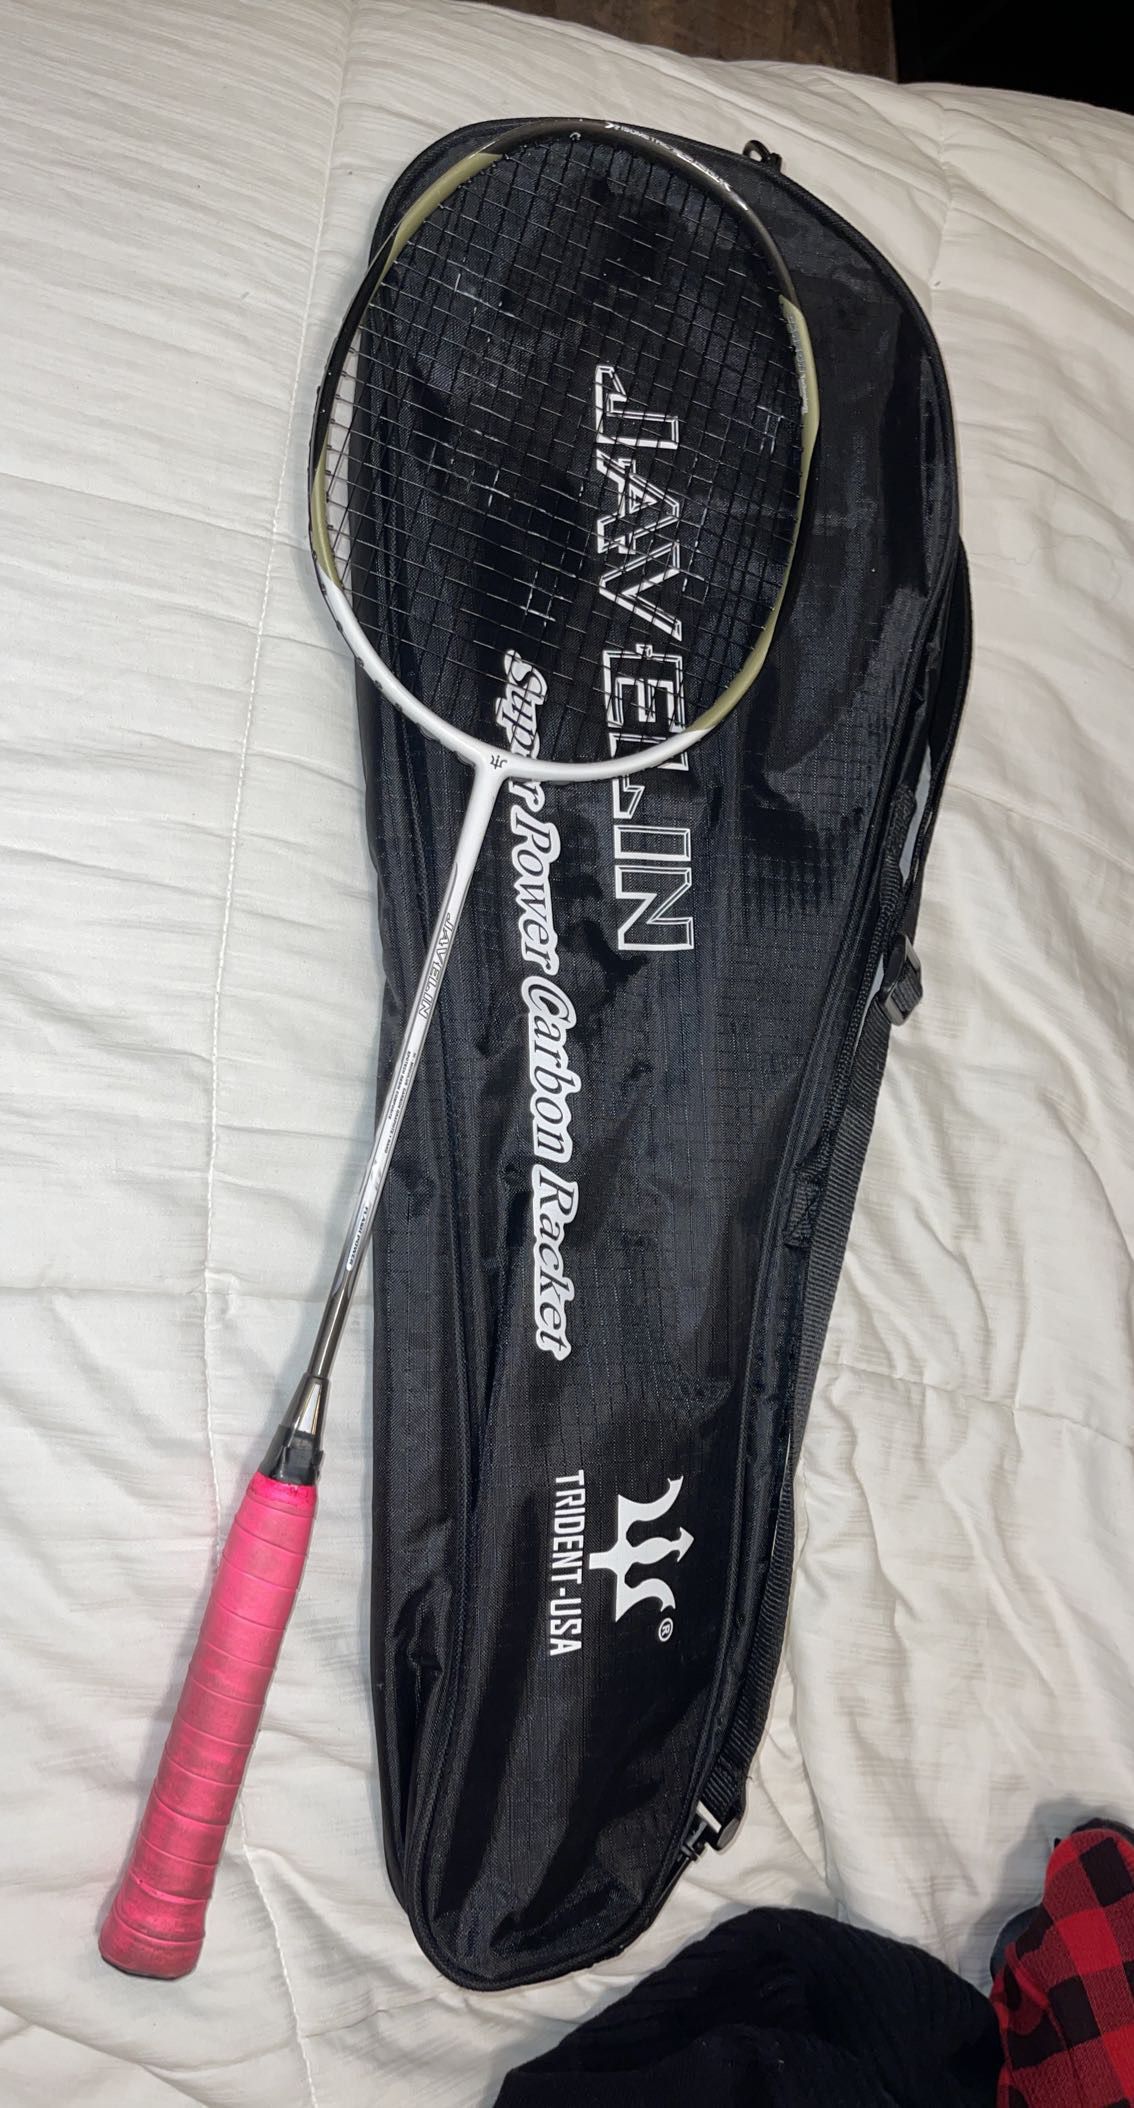 Badminton Racket 